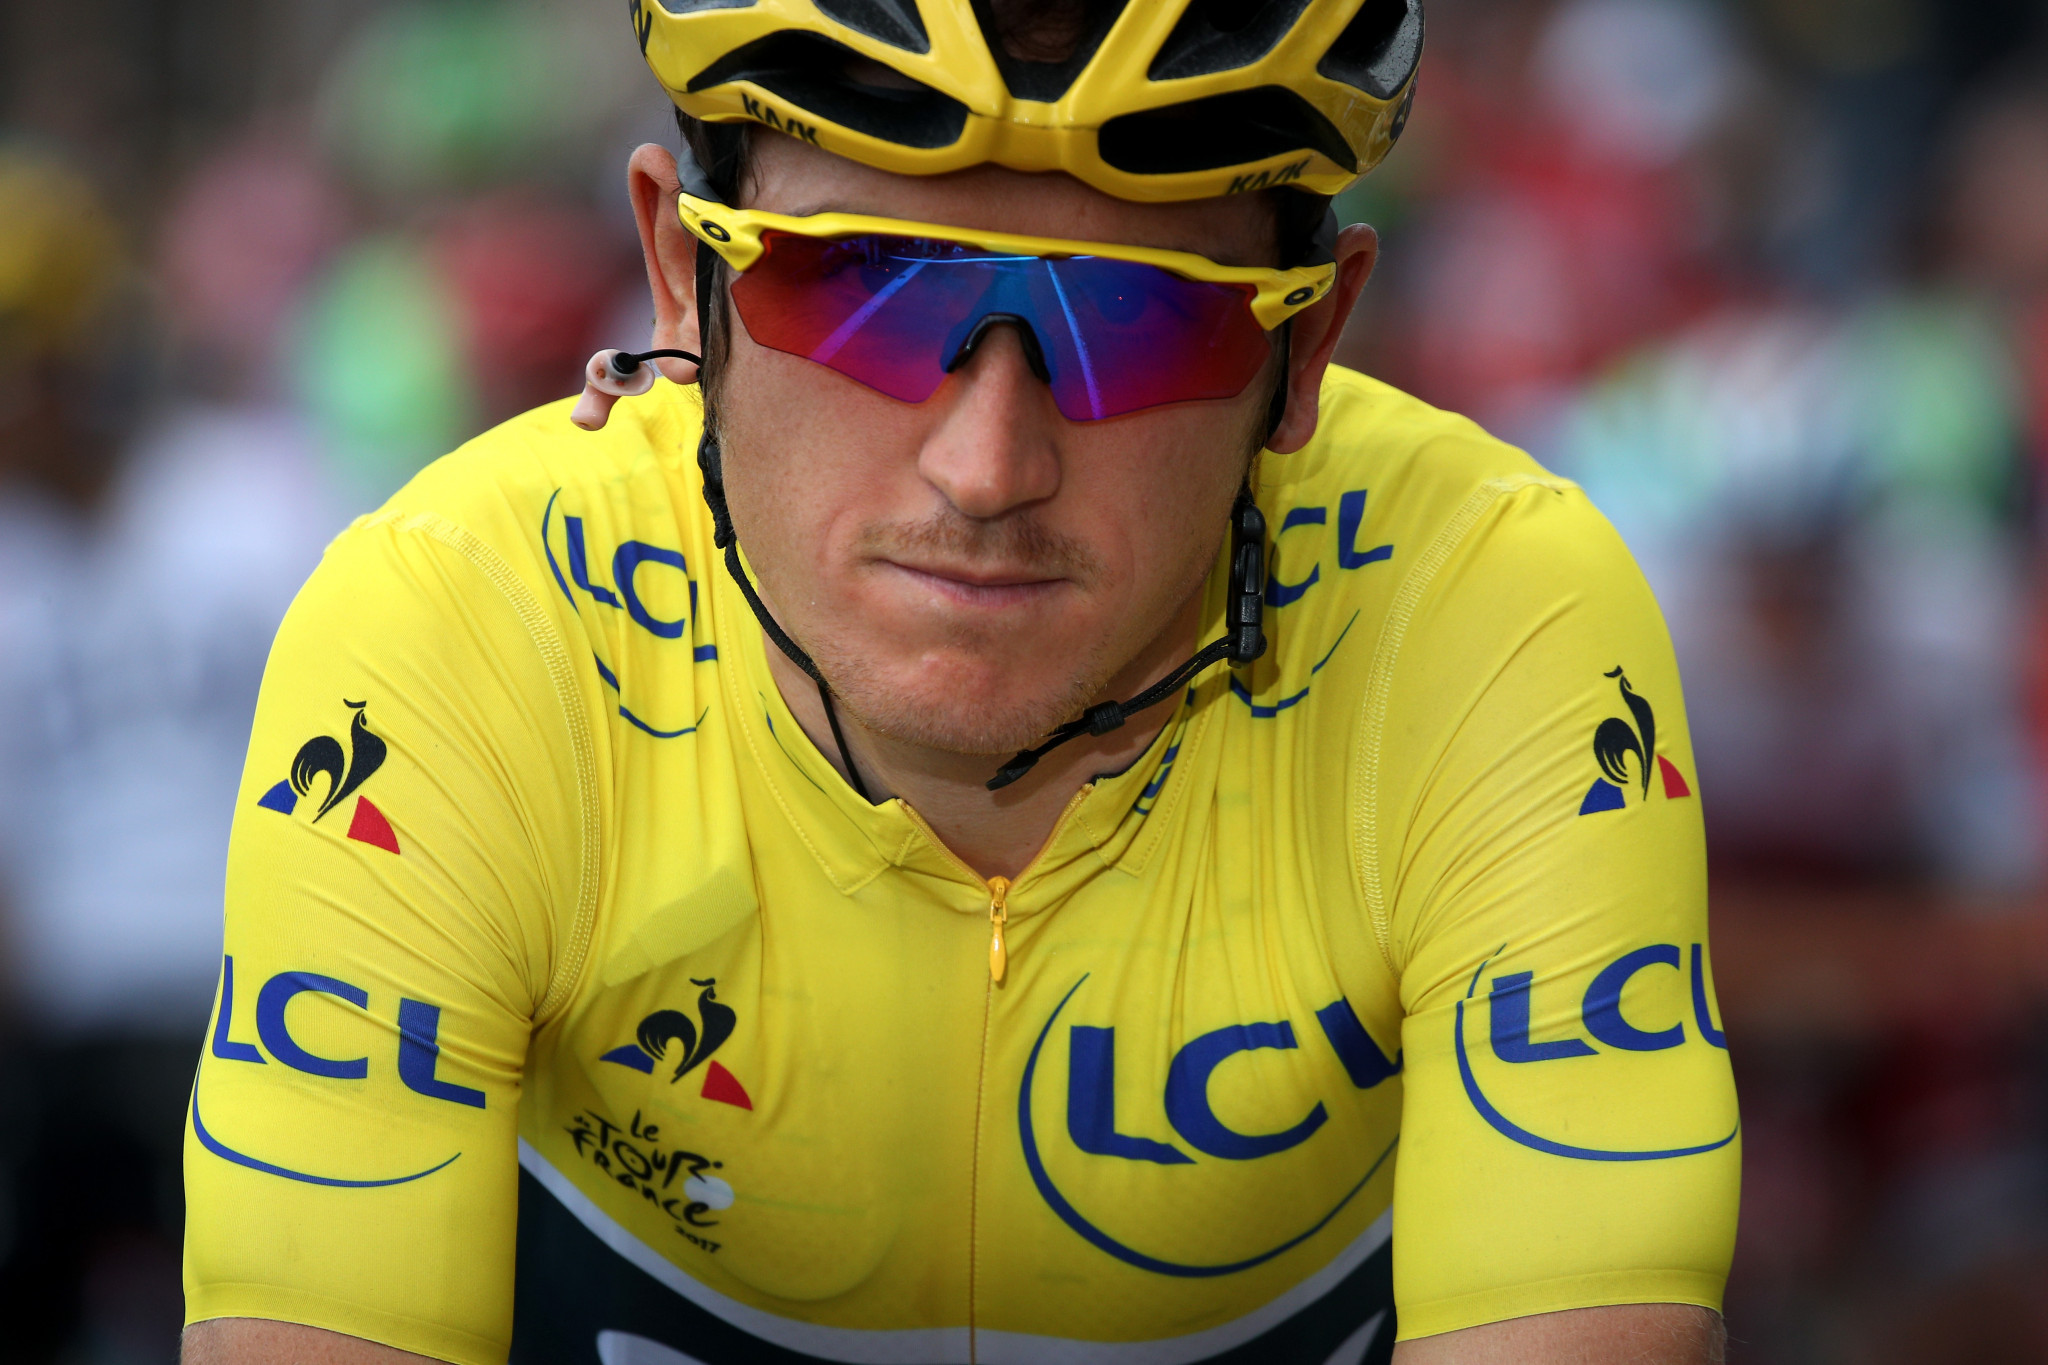 Britain's Thomas powers to Tour de Suisse title in time trial